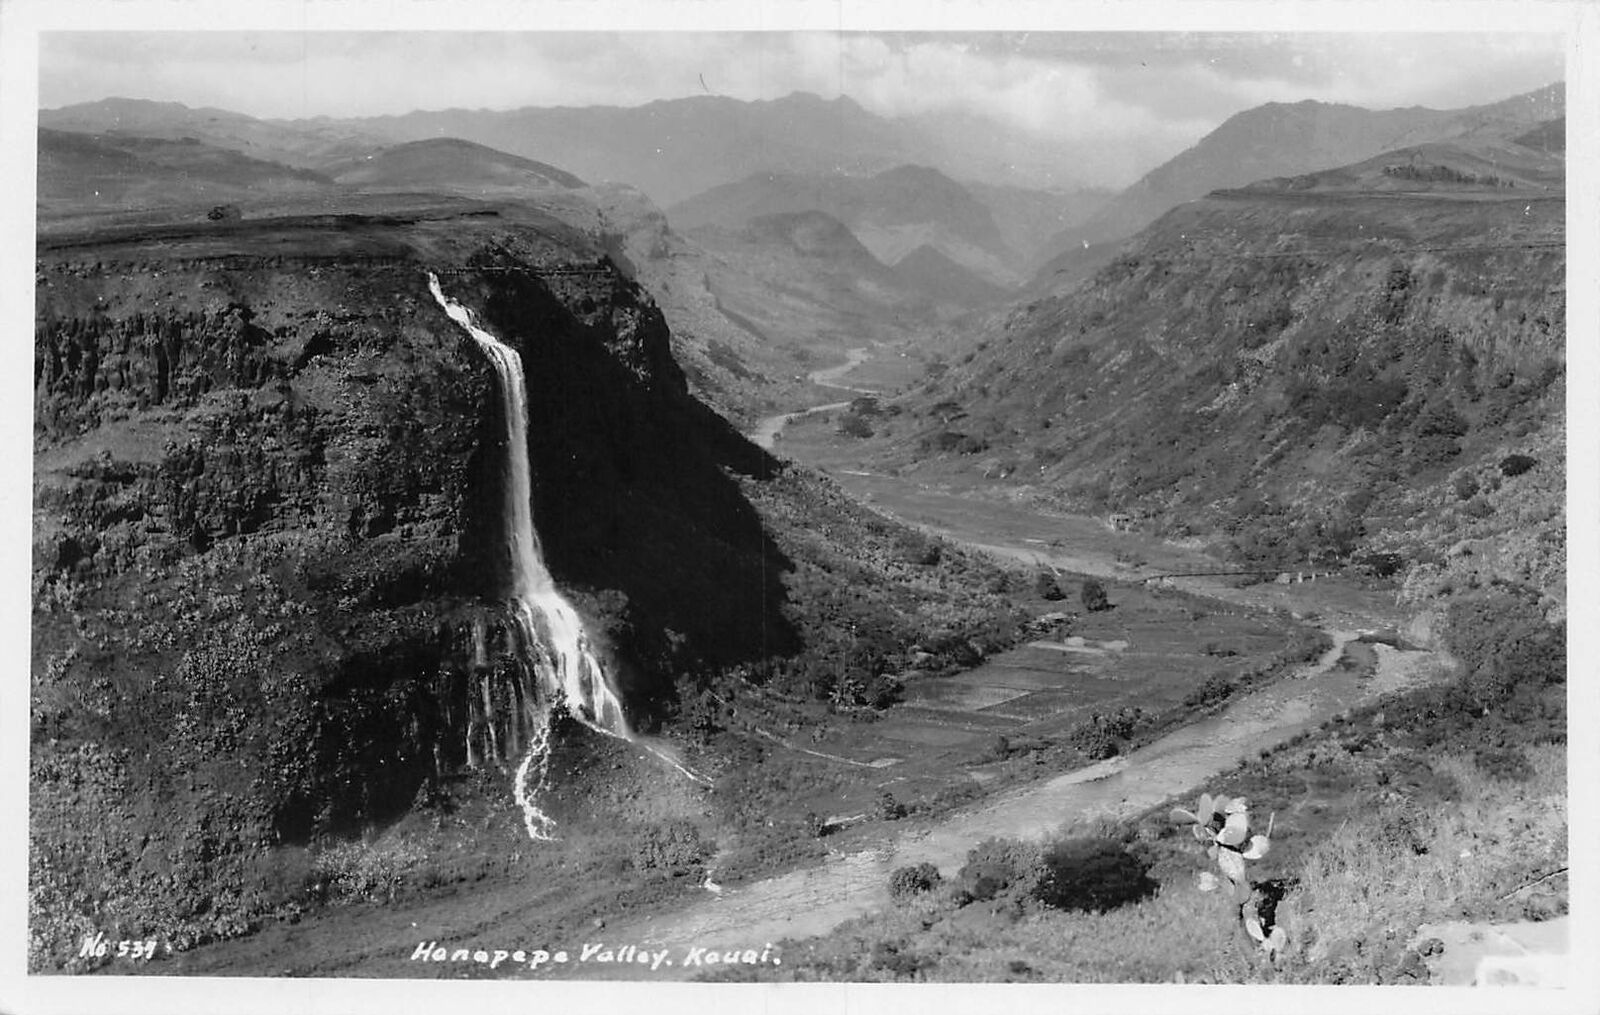 J75/ Hawaii RPPC Postcard c1940s Kauai Island Hanapepa Valley Waterfall  361